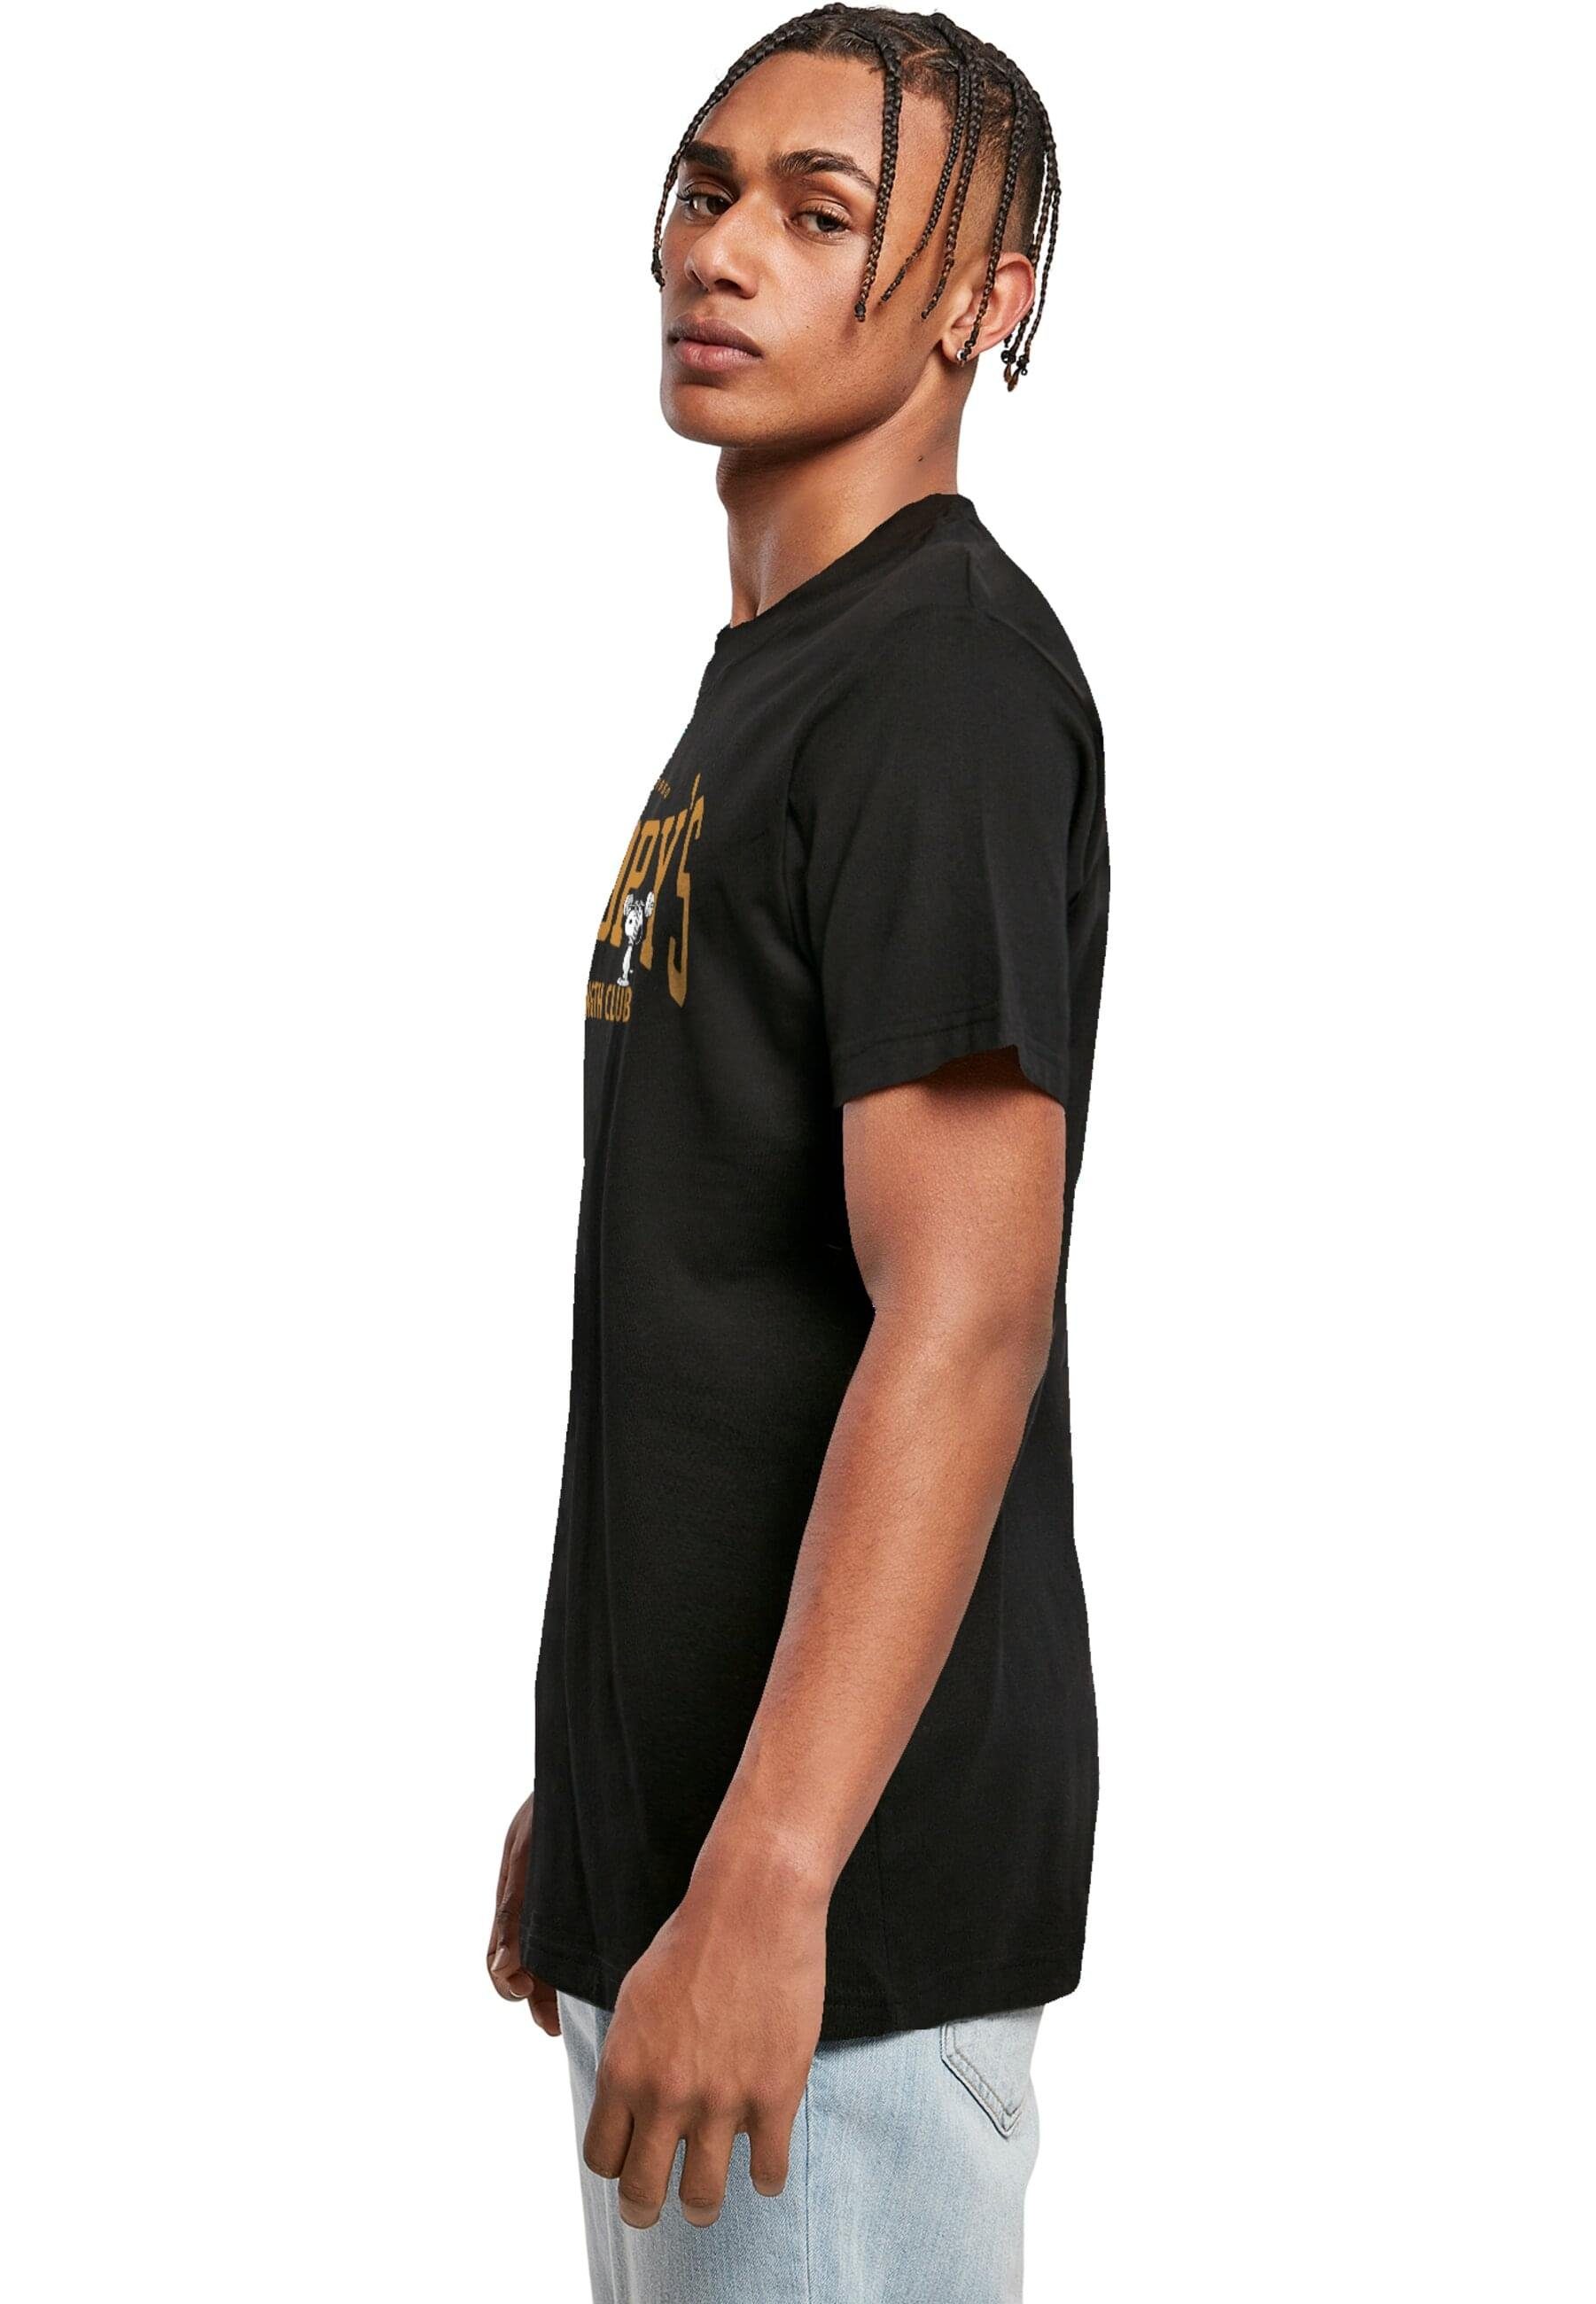 Merchcode T-Shirt Herren (1-tlg) T-Shirt - Neck club Strength black Peanuts Round